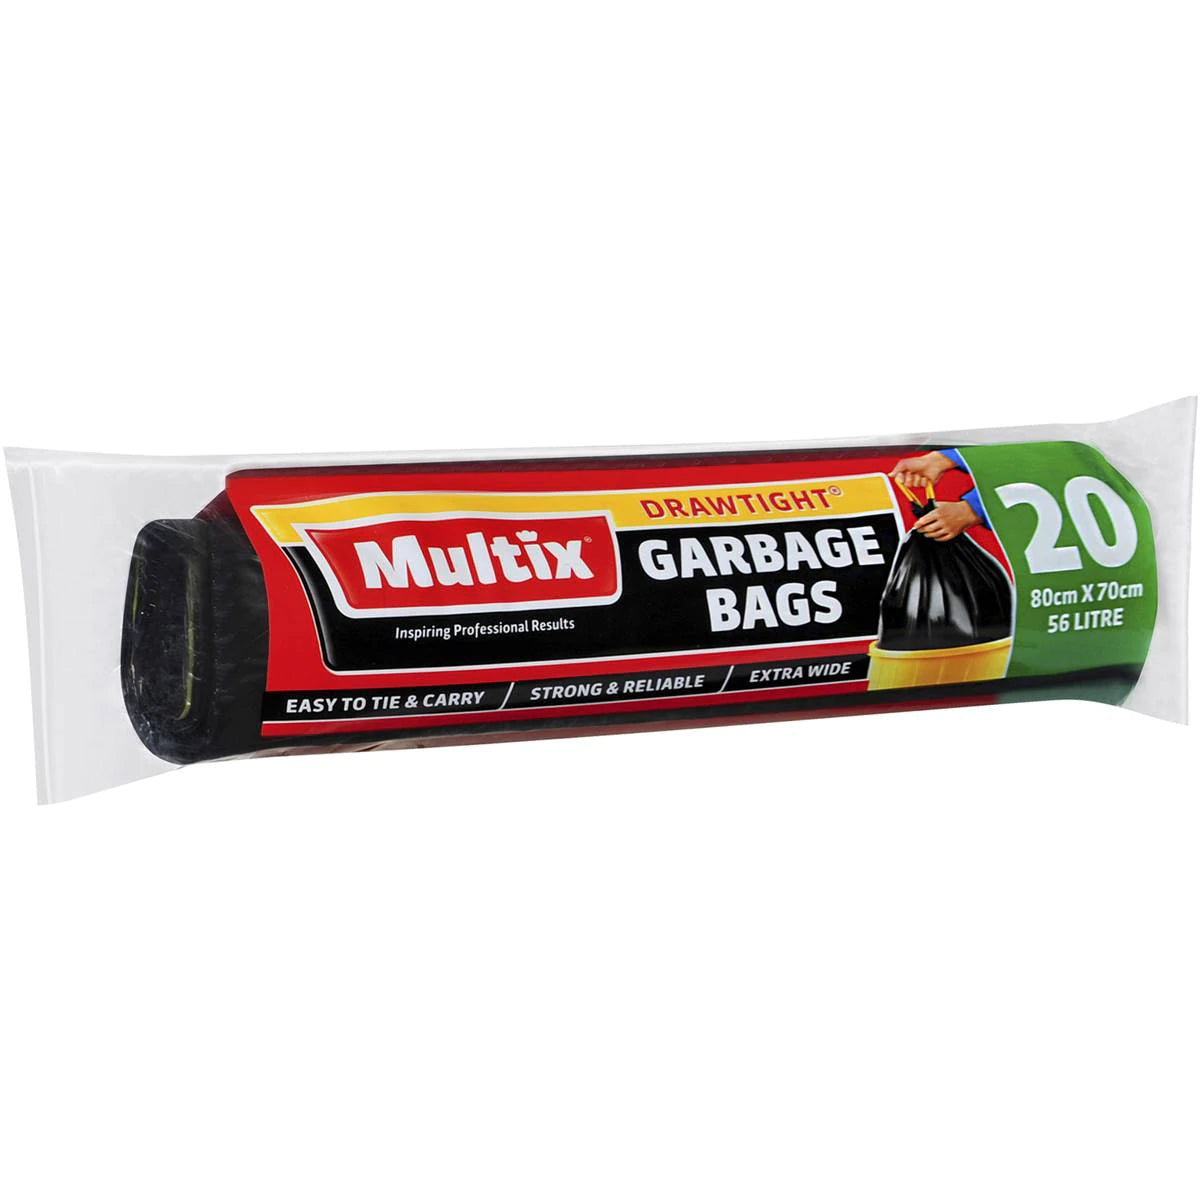 Multix Garbage Bags Drawtight 56L 20pk